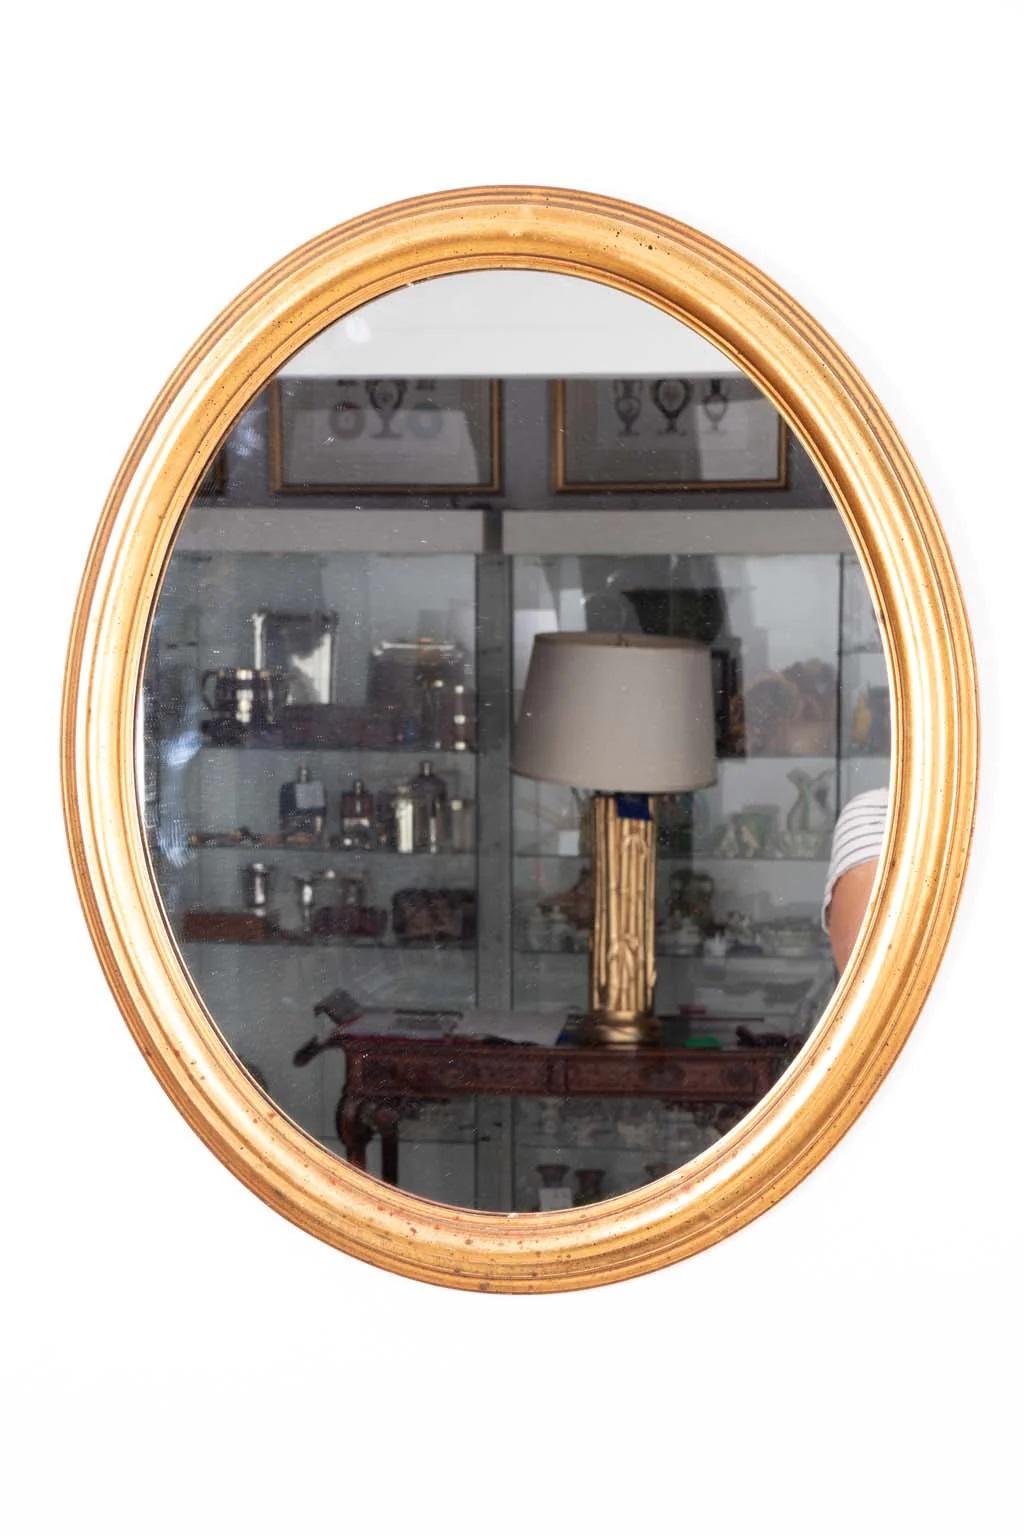 Miroir ovale italien en bois doré. Grande taille, mesure 24